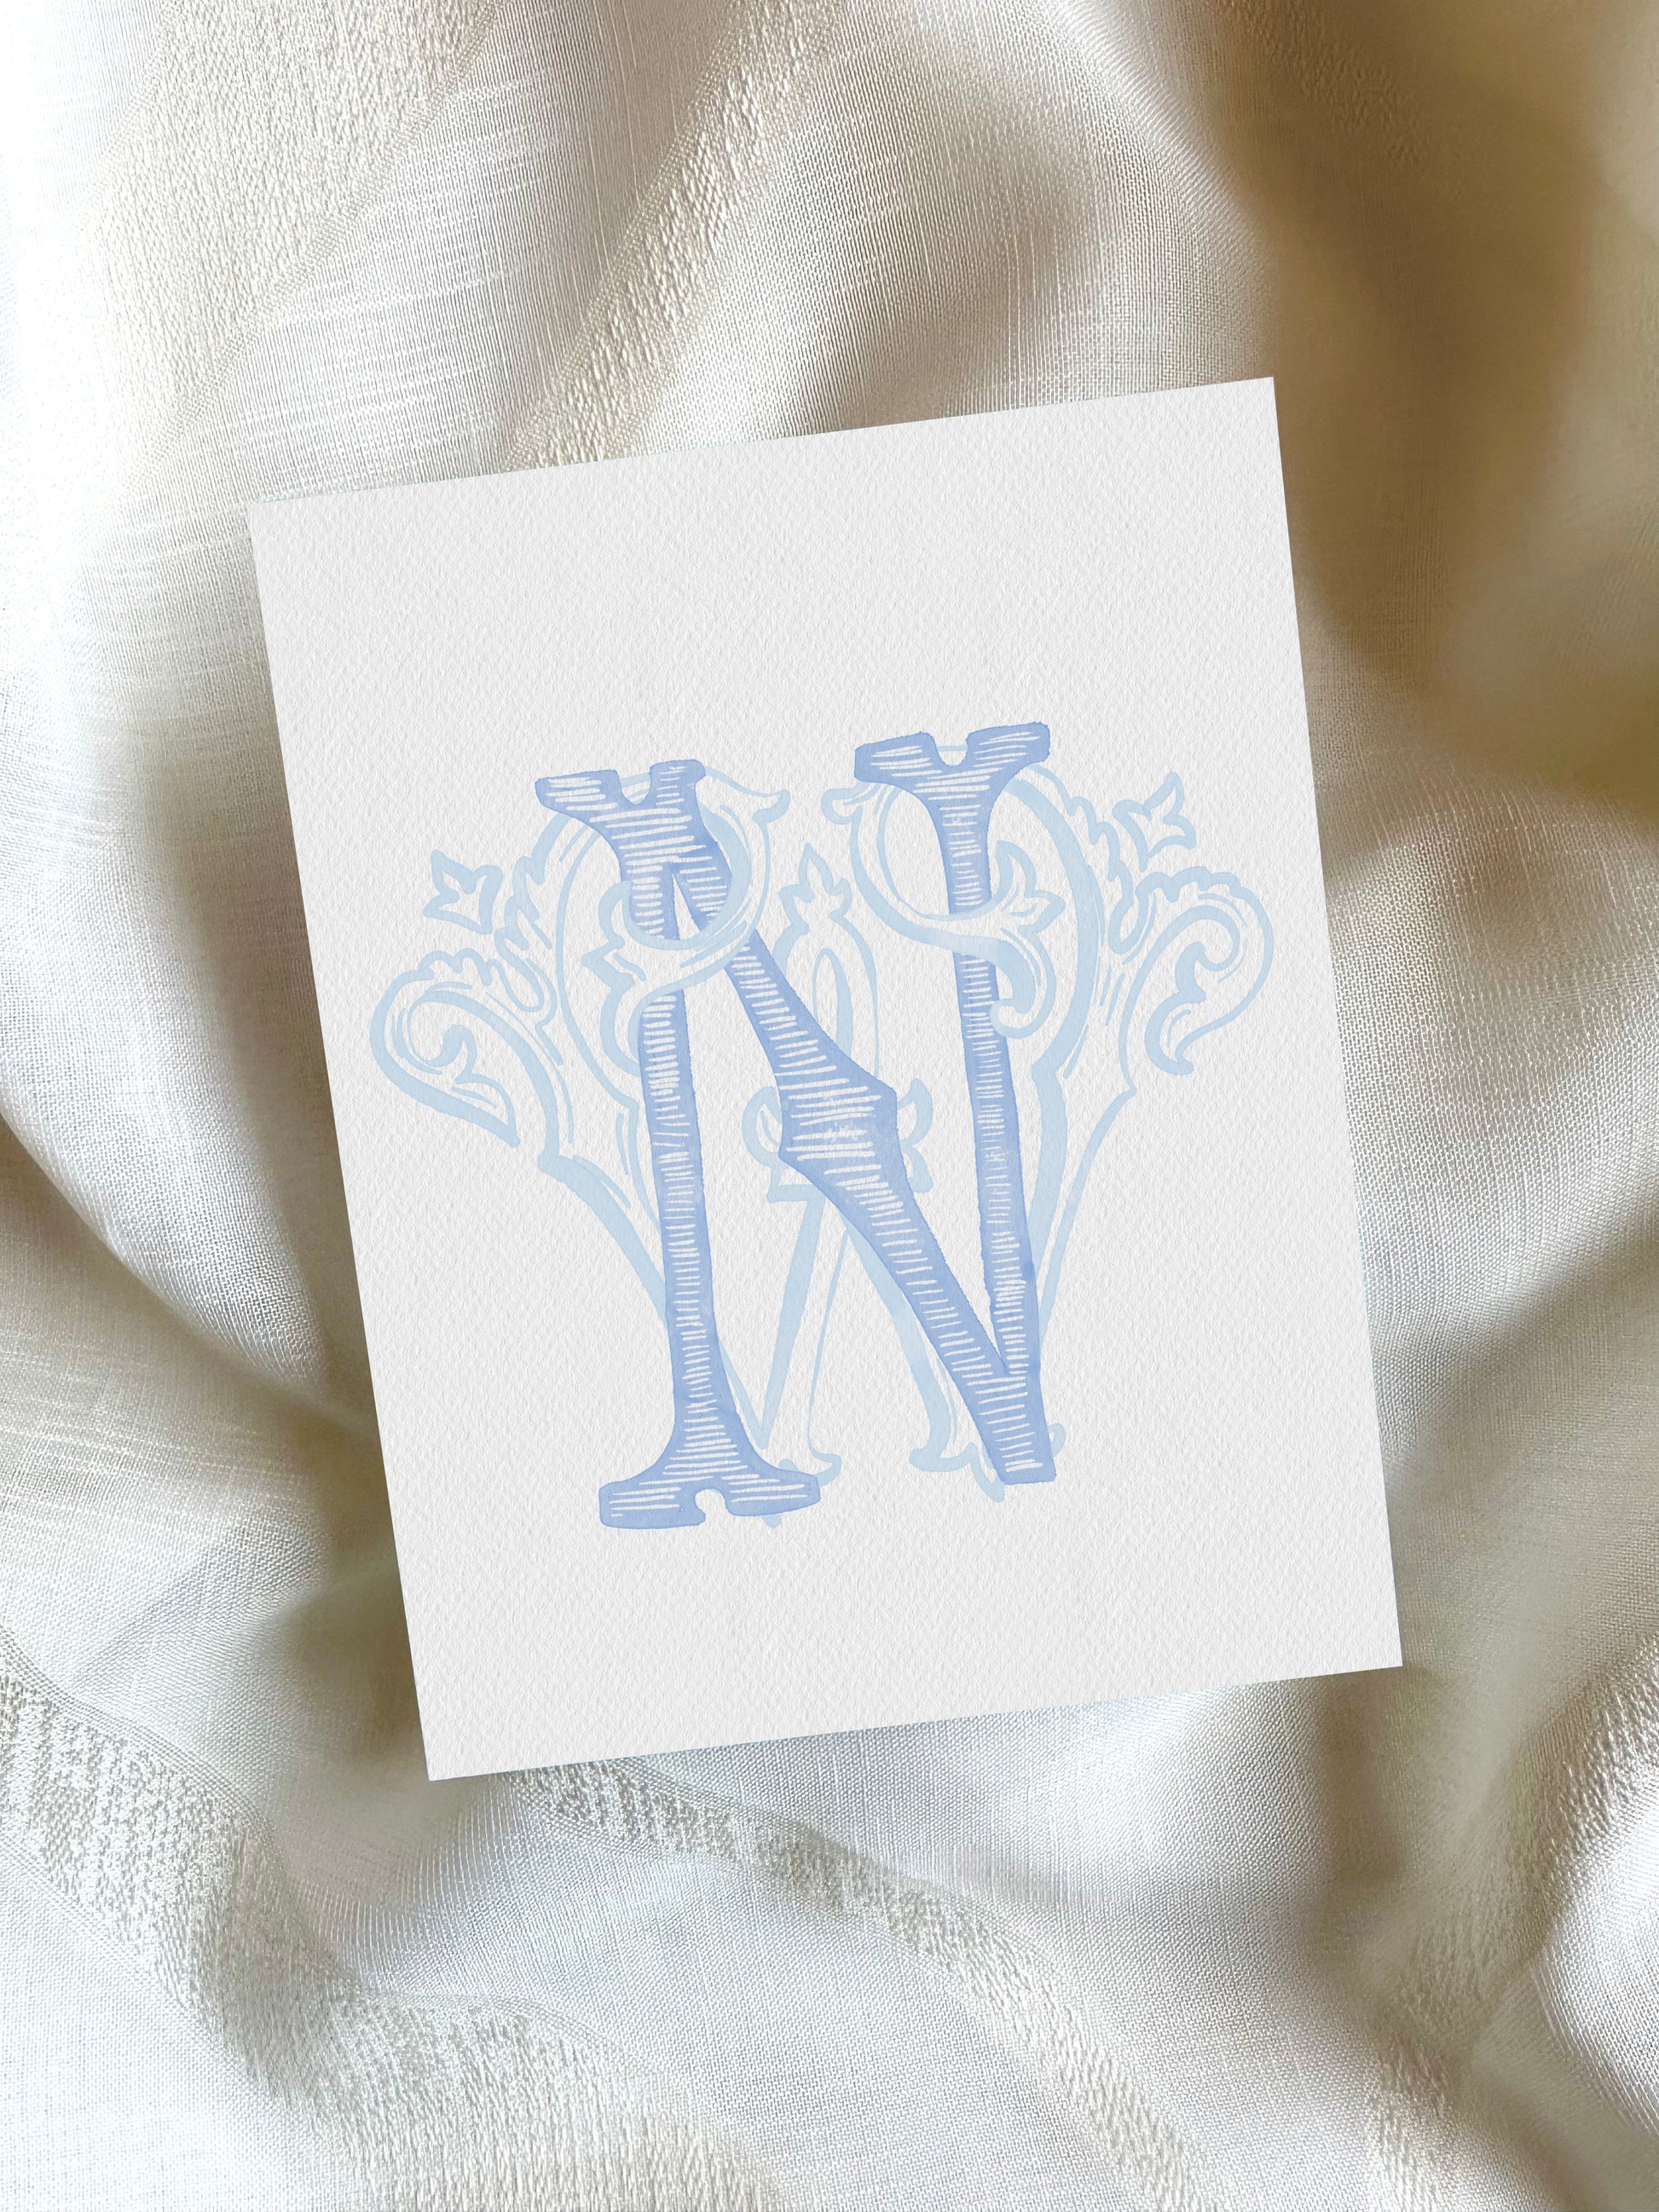 2 Letter Monogram with Letters NW WN | Digital Download - Wedding Monogram SVG, Personal Logo, Wedding Logo for Wedding Invitations The Wedding Crest Lab